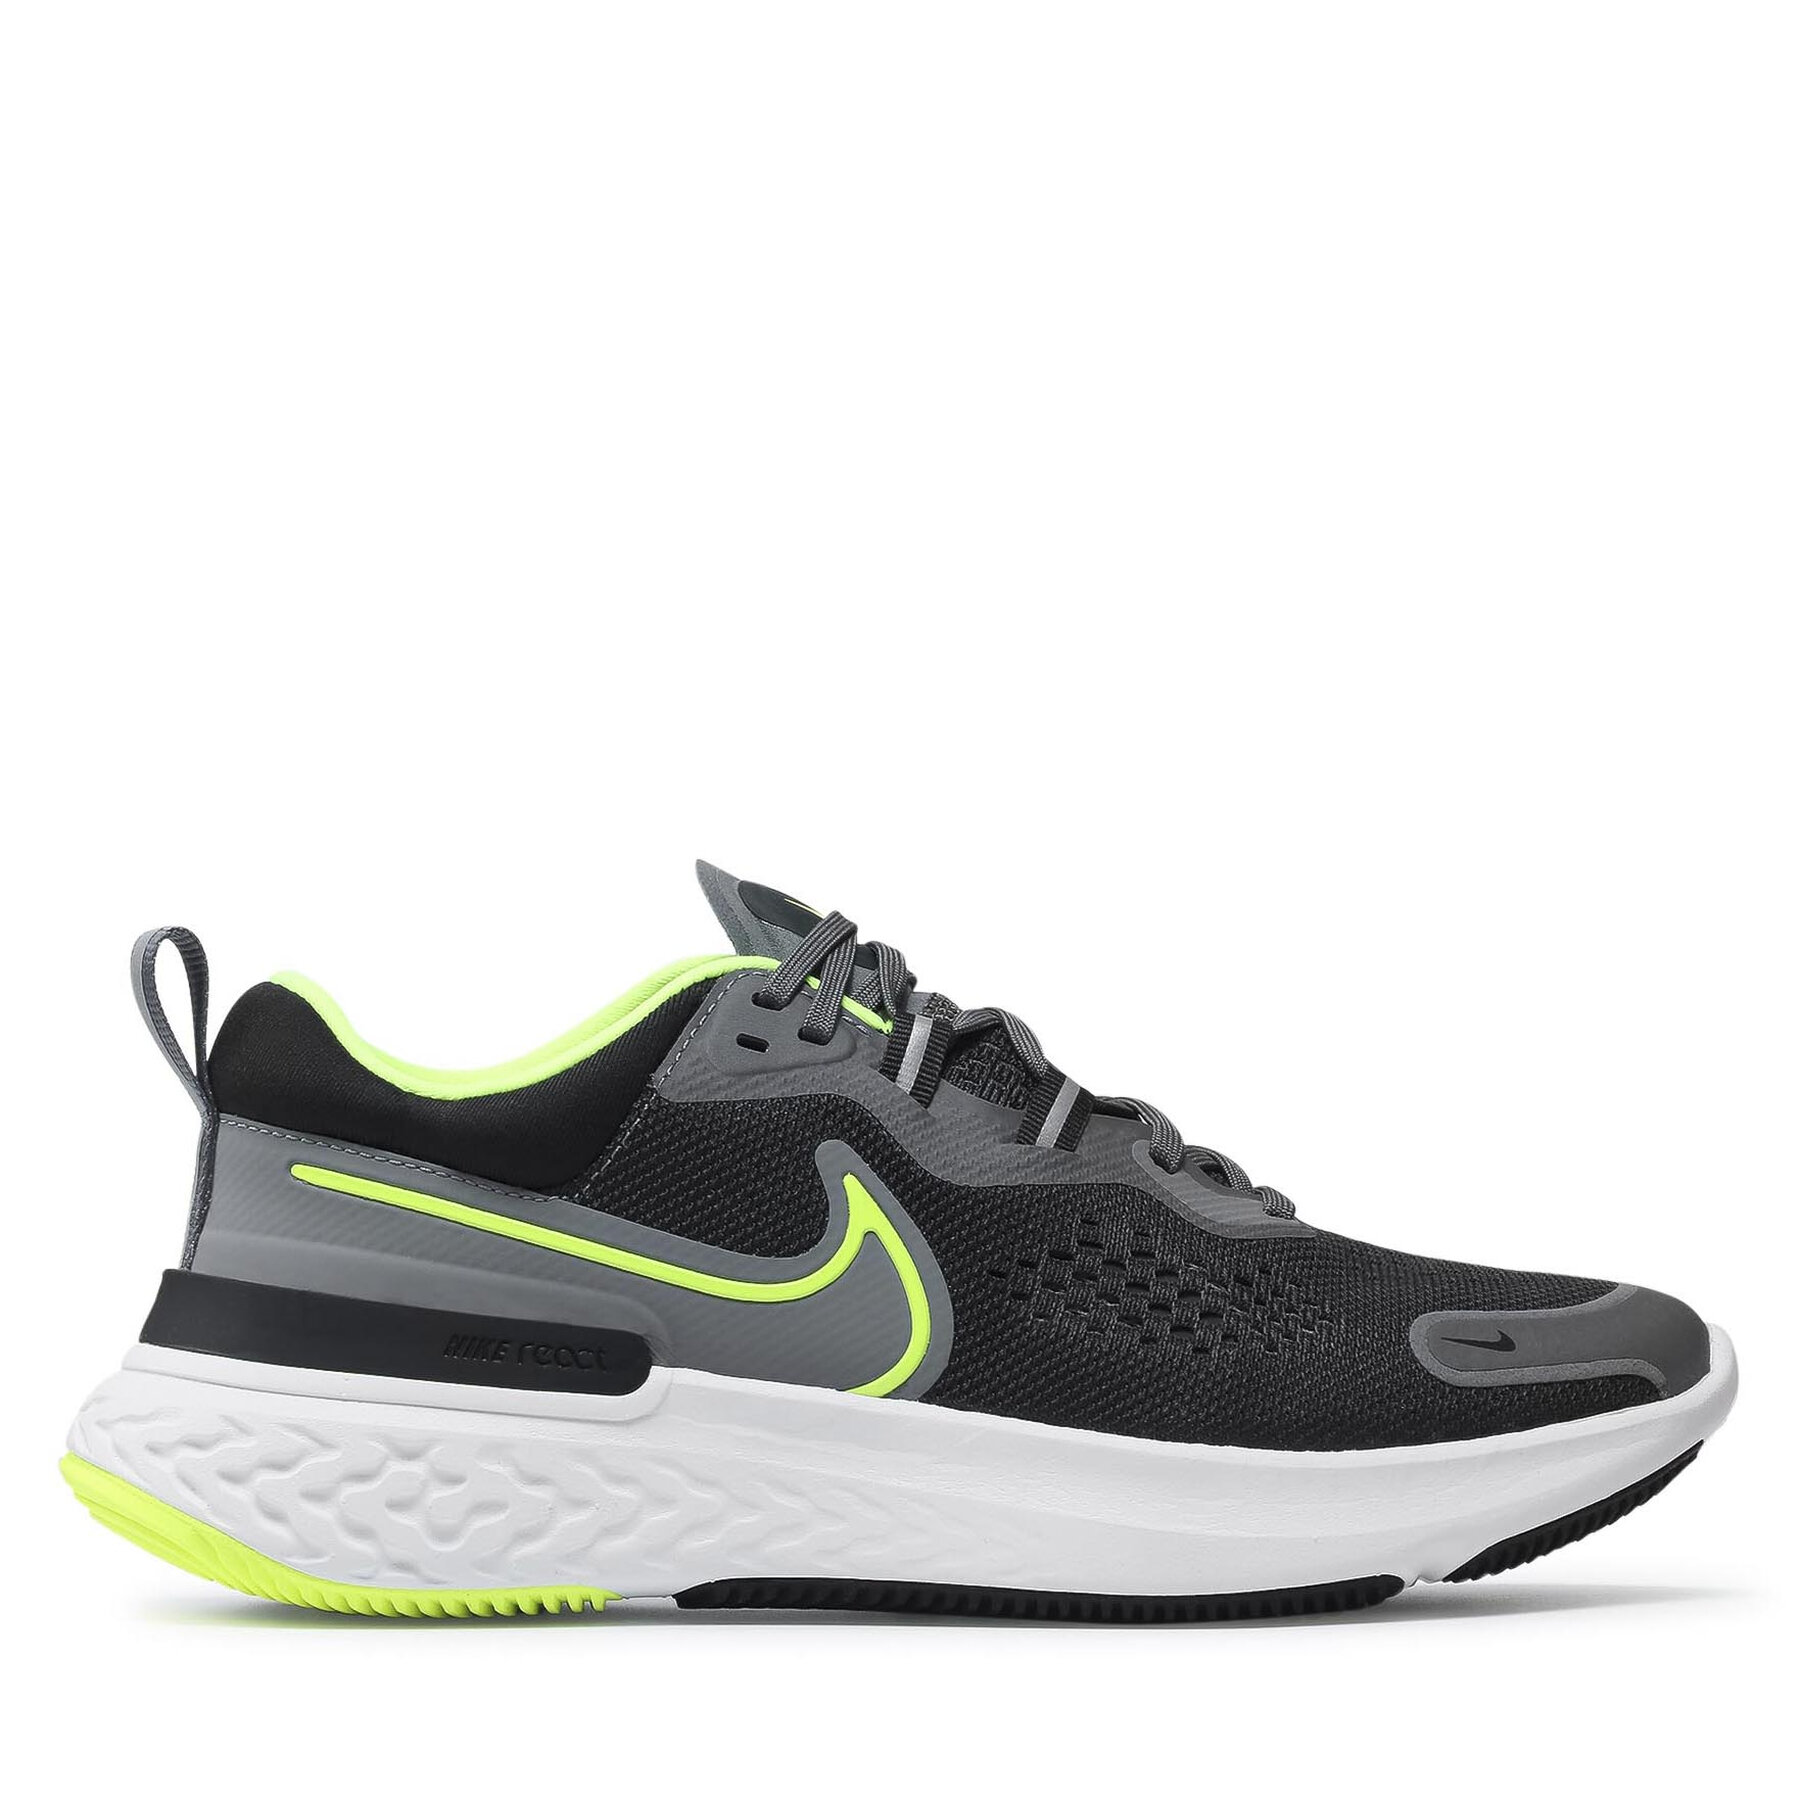 Comprar en oferta Nike React Miler 2 smoke grey/black/volt